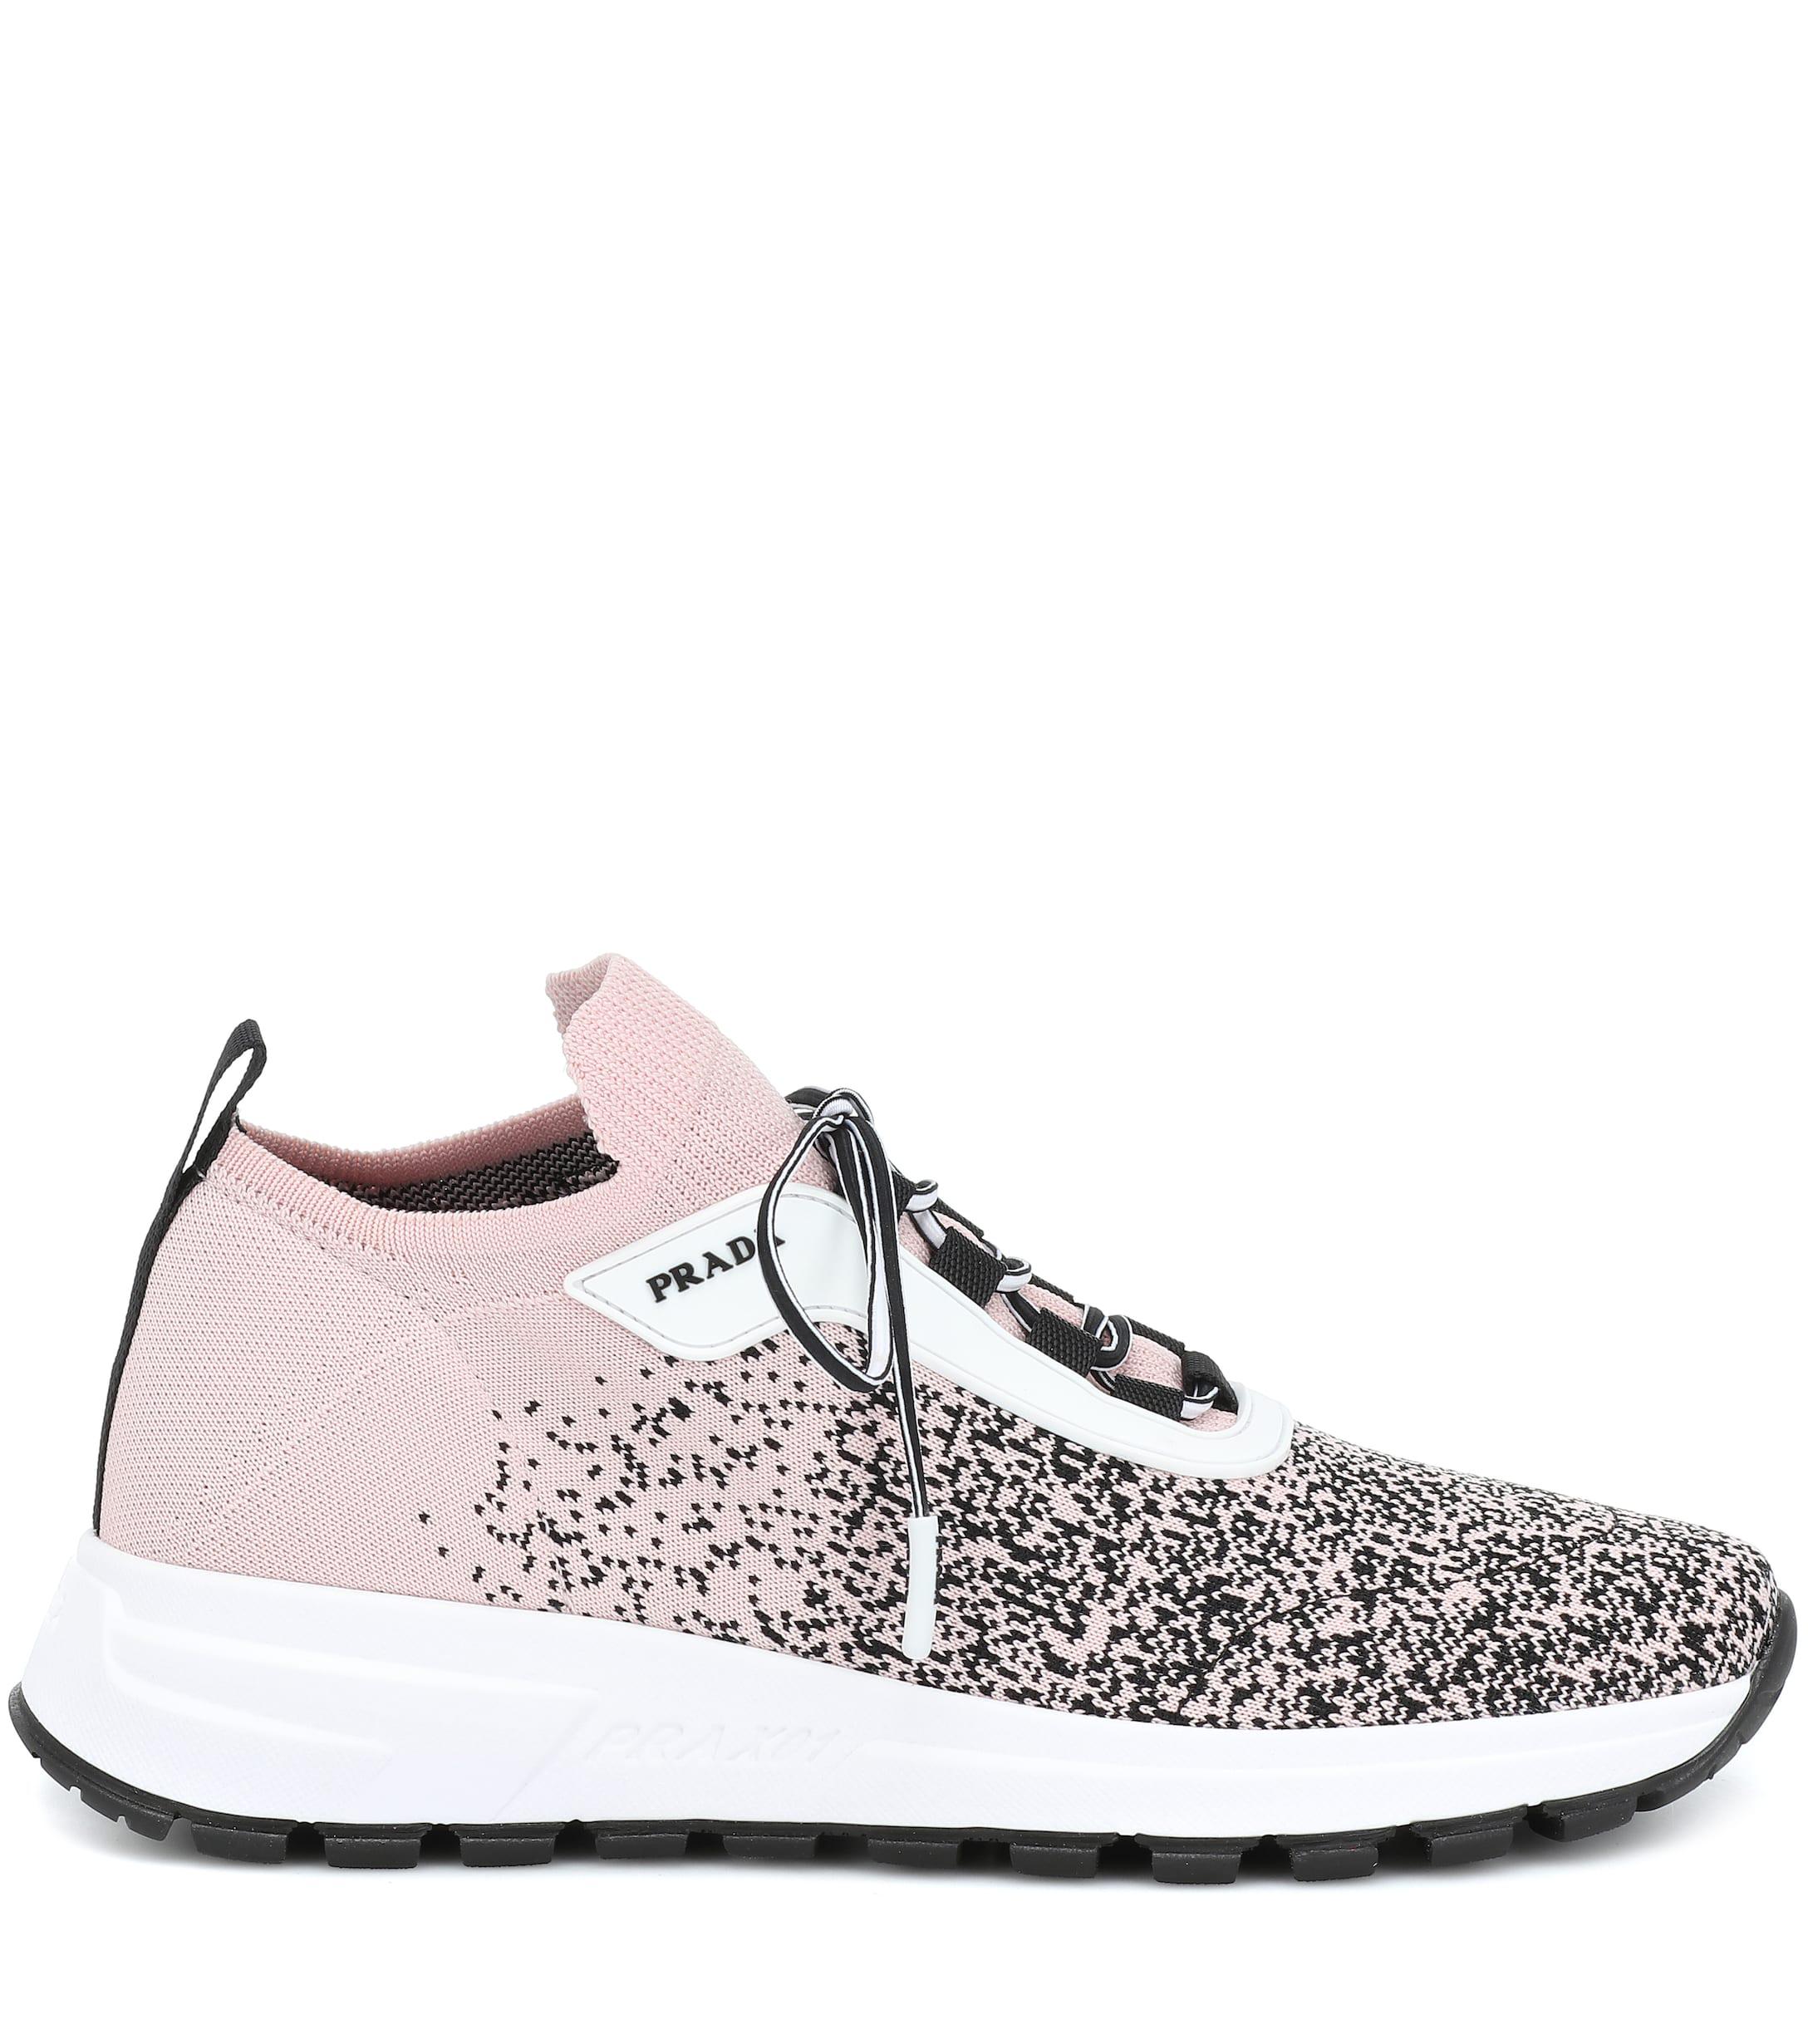 Prada Prax-01 Knit Sneakers in Pink - Lyst